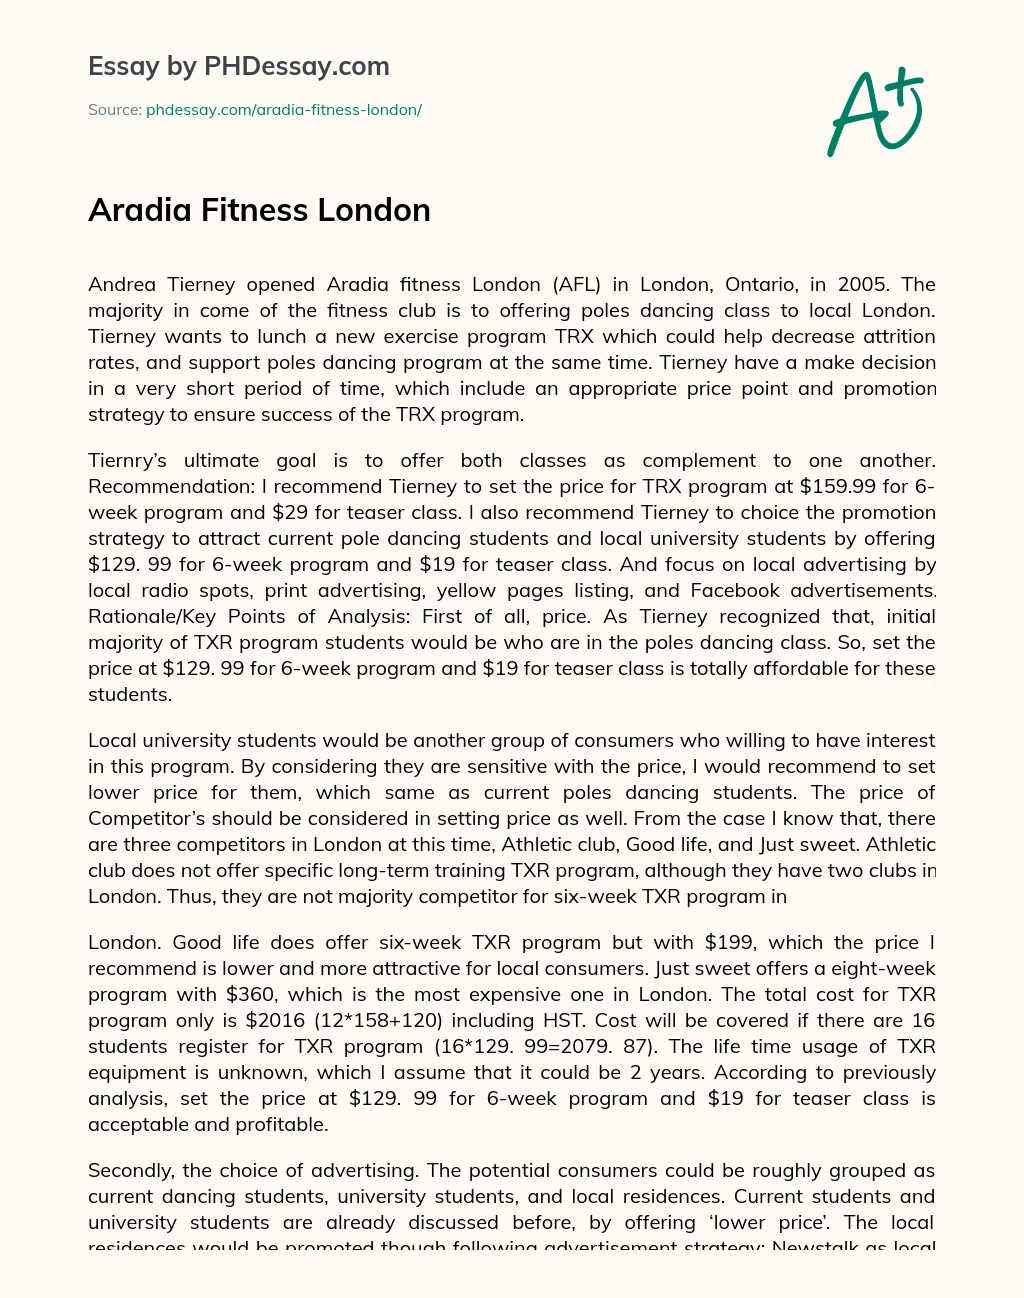 Aradia Fitness London essay